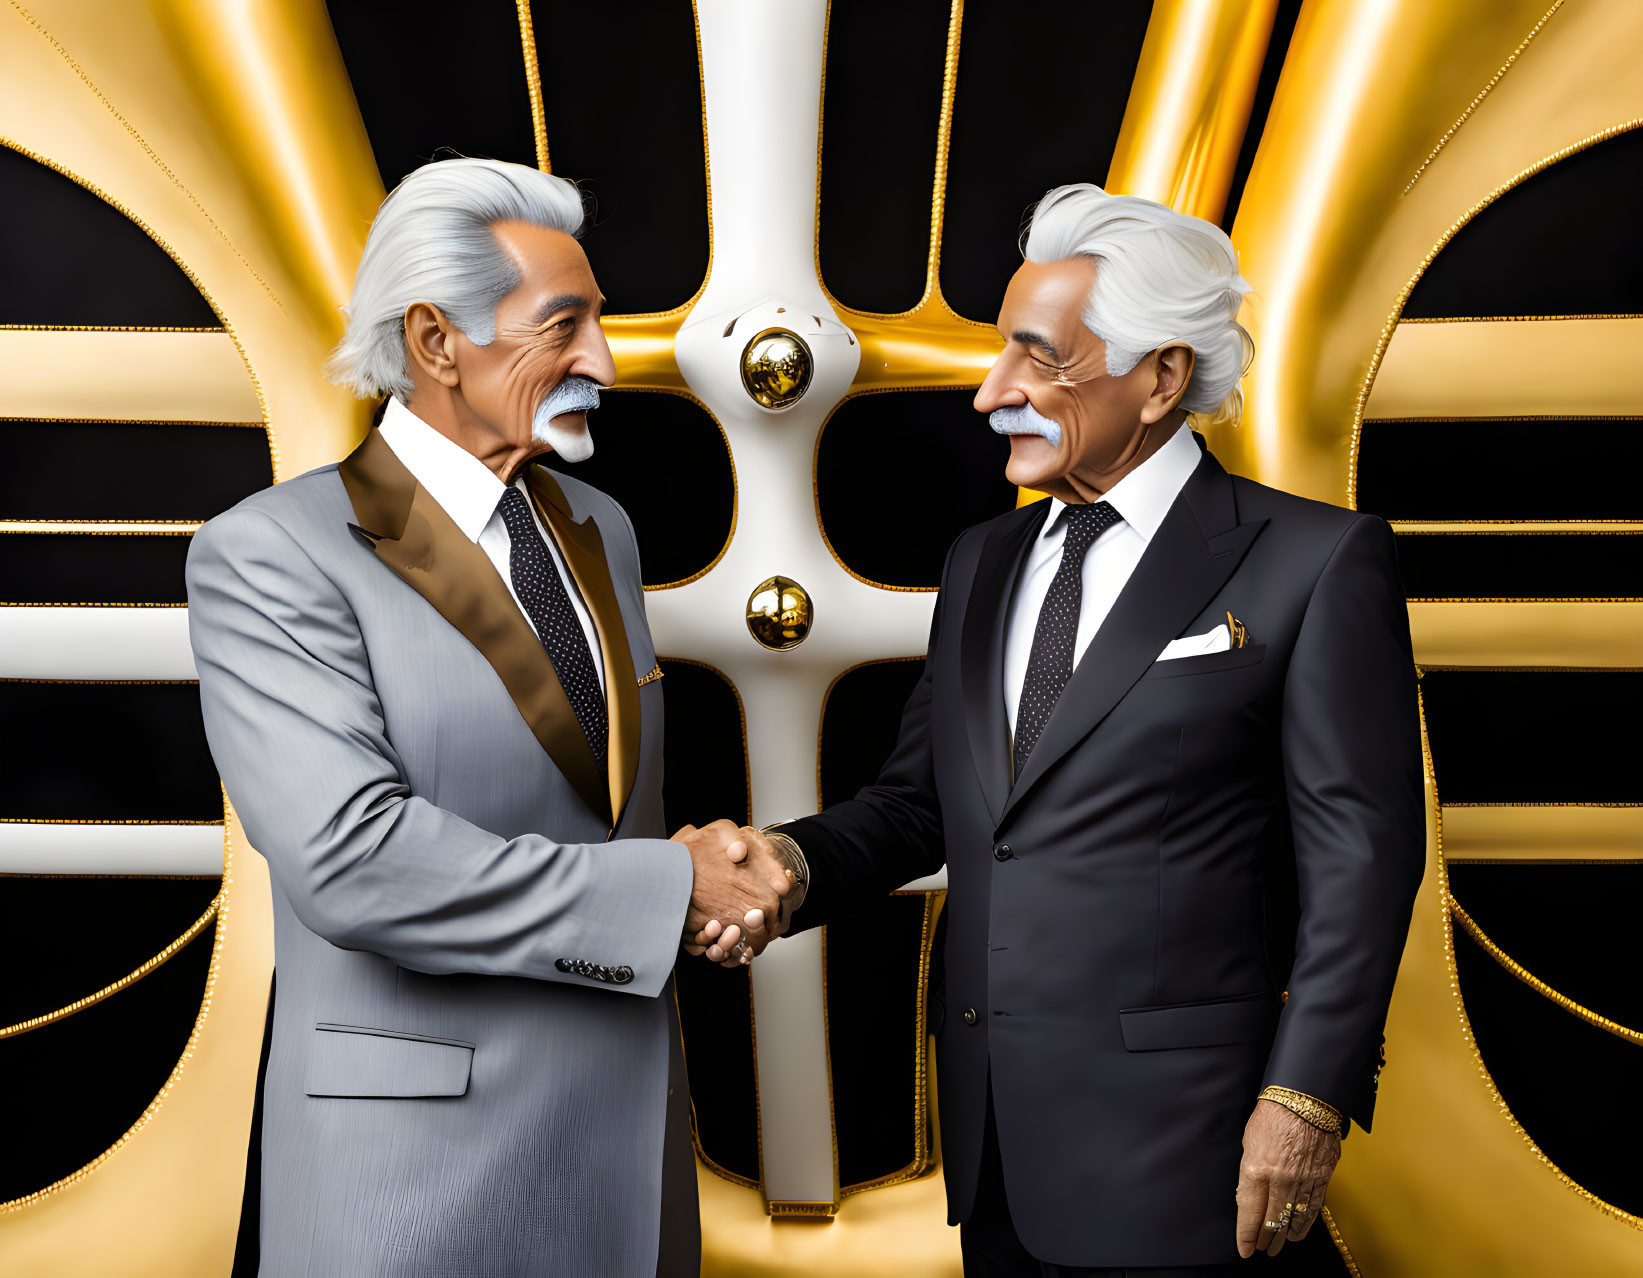 Elderly Men in Suits Shaking Hands Against Luxurious Golden Backdrop